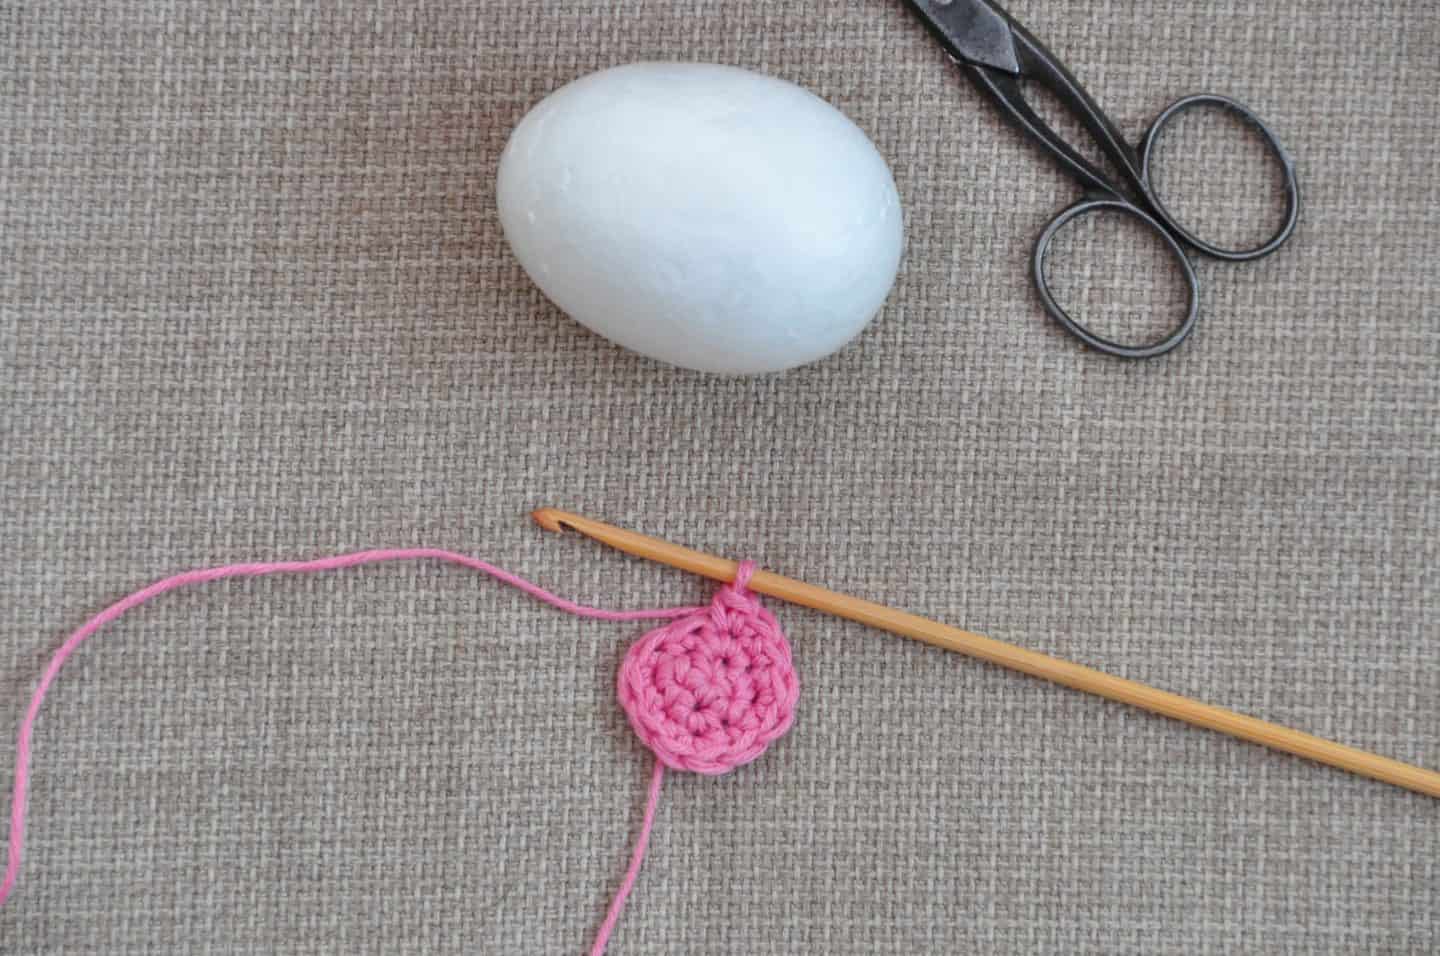 small crochet circle with crochet hook showing start of amigurumi crochet Easter egg 